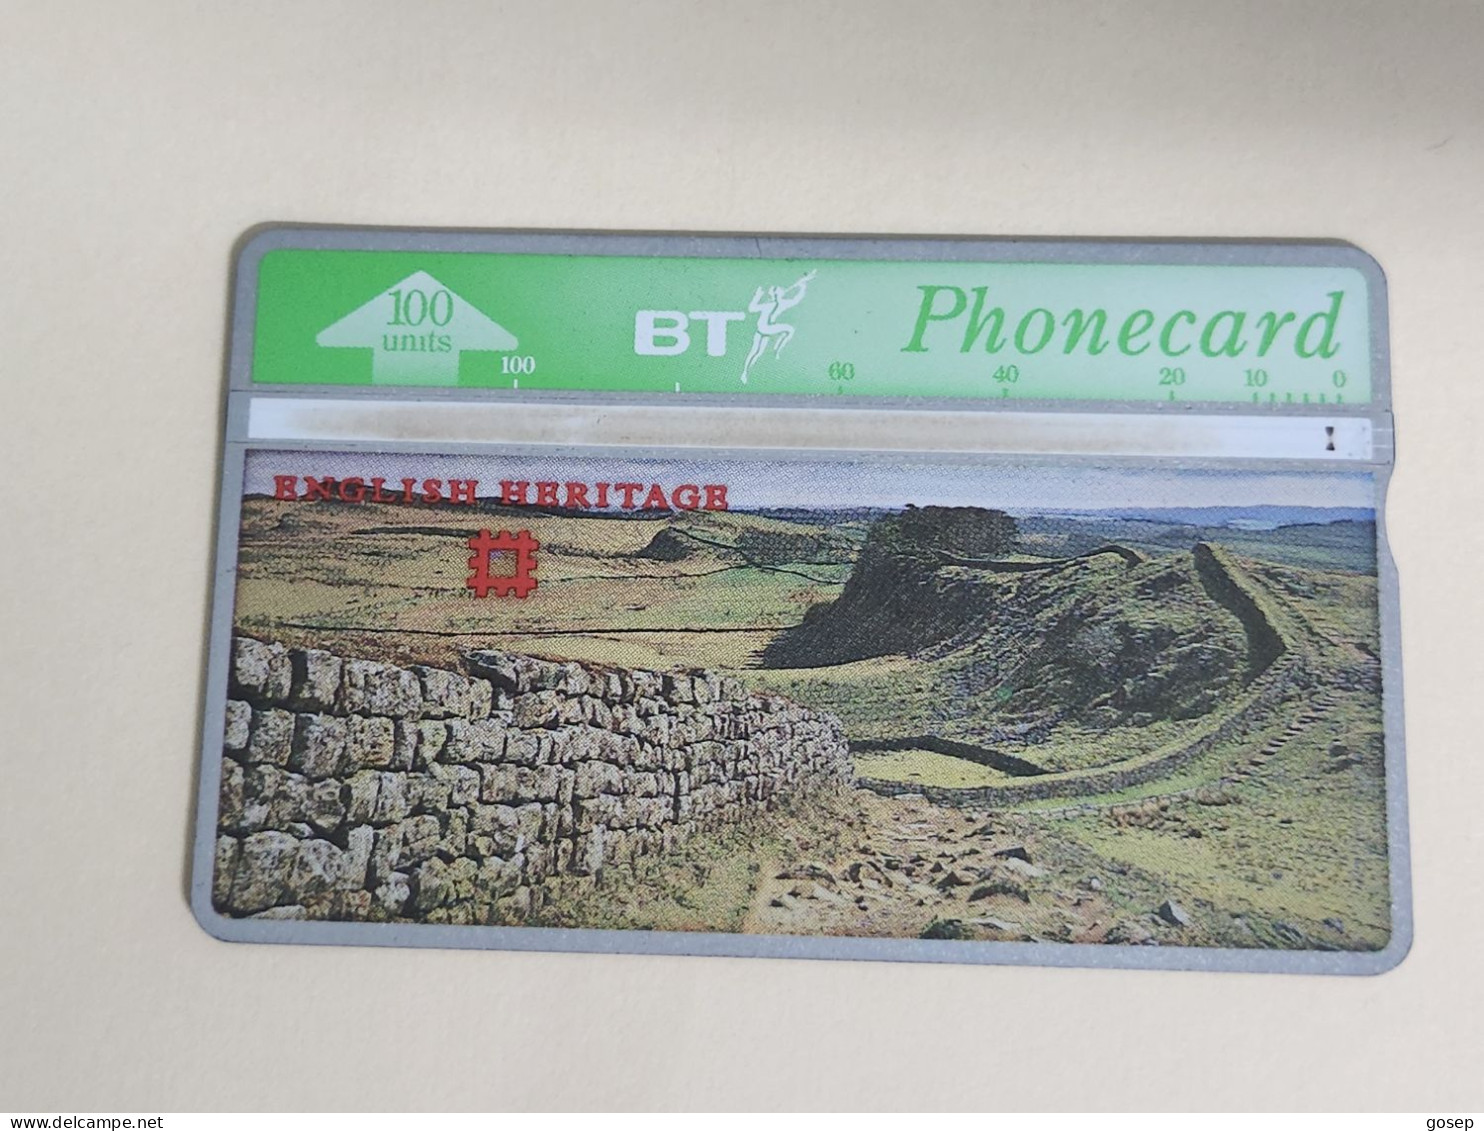 United Kingdom-(BTA117)-HERITAGE-Hadrian's Wall-(204)(100units)(527H20786)price Cataloge3.00£-used+1card Prepiad Free - BT Advertising Issues